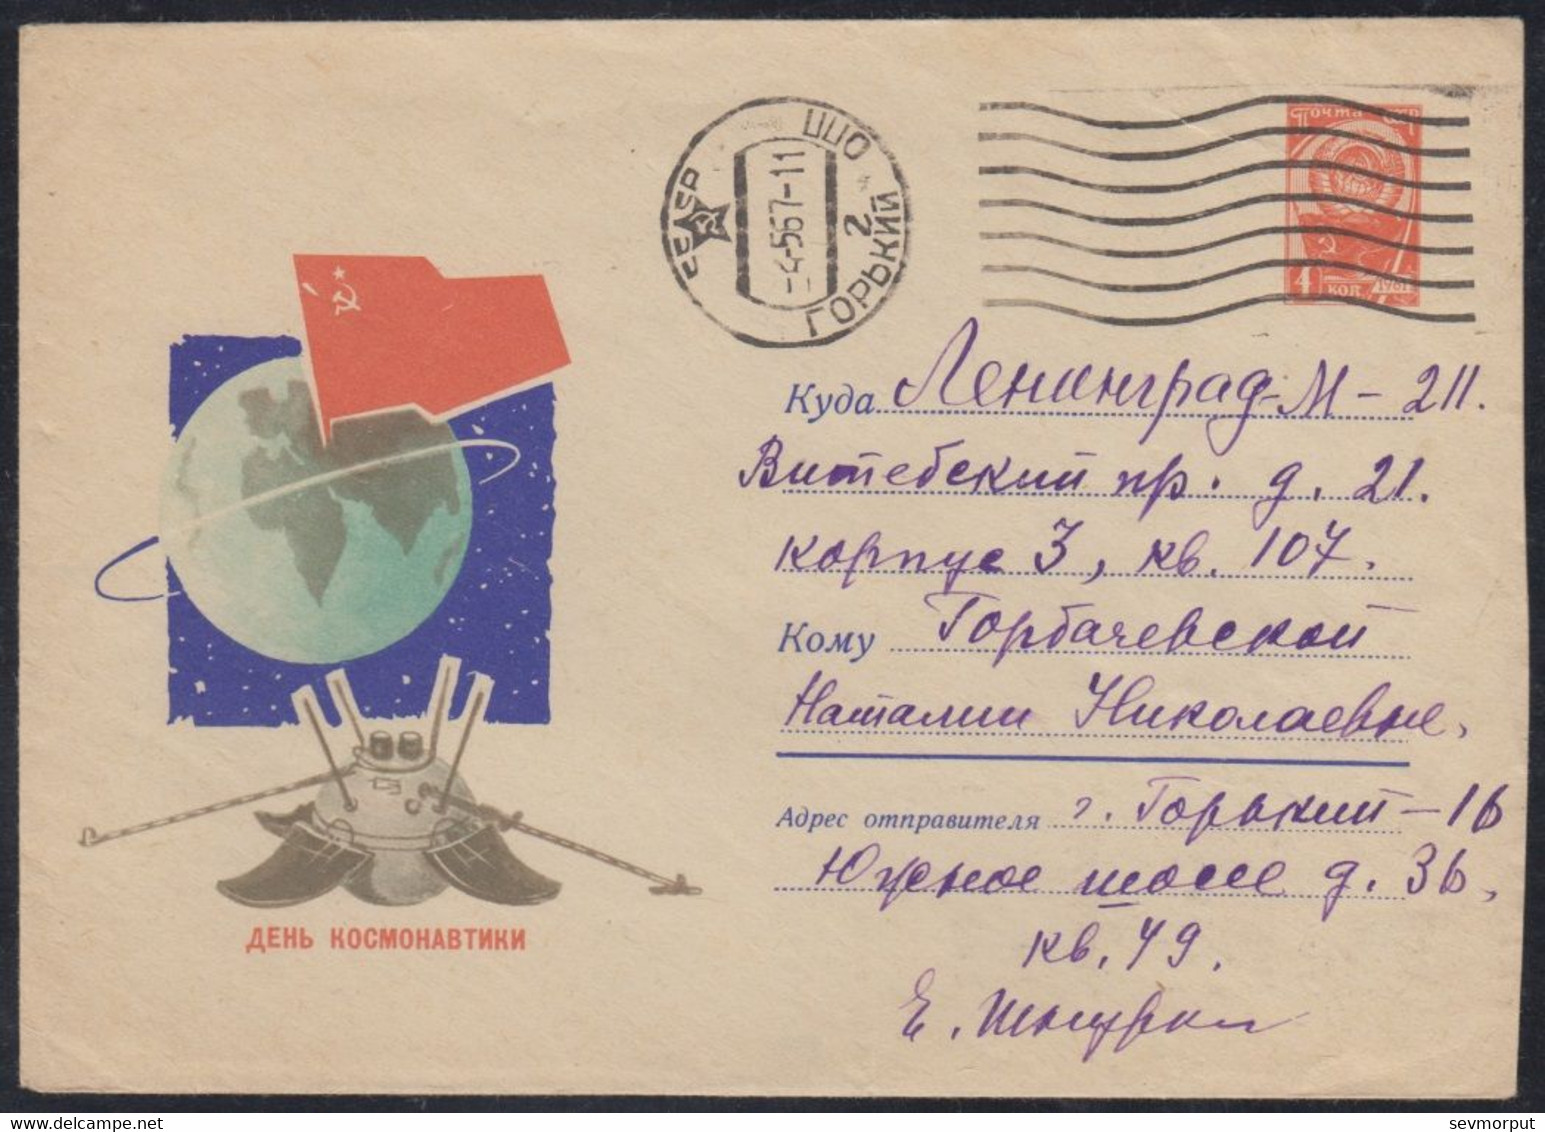 5278 RUSSIA 1967 ENTIER COVER Used SPACE "LUNA-9" AUTOMATIC ESPACE "MOON-9" RADIO TELECOM EARTH GLOBE USSR Mailed 118 - 1960-69